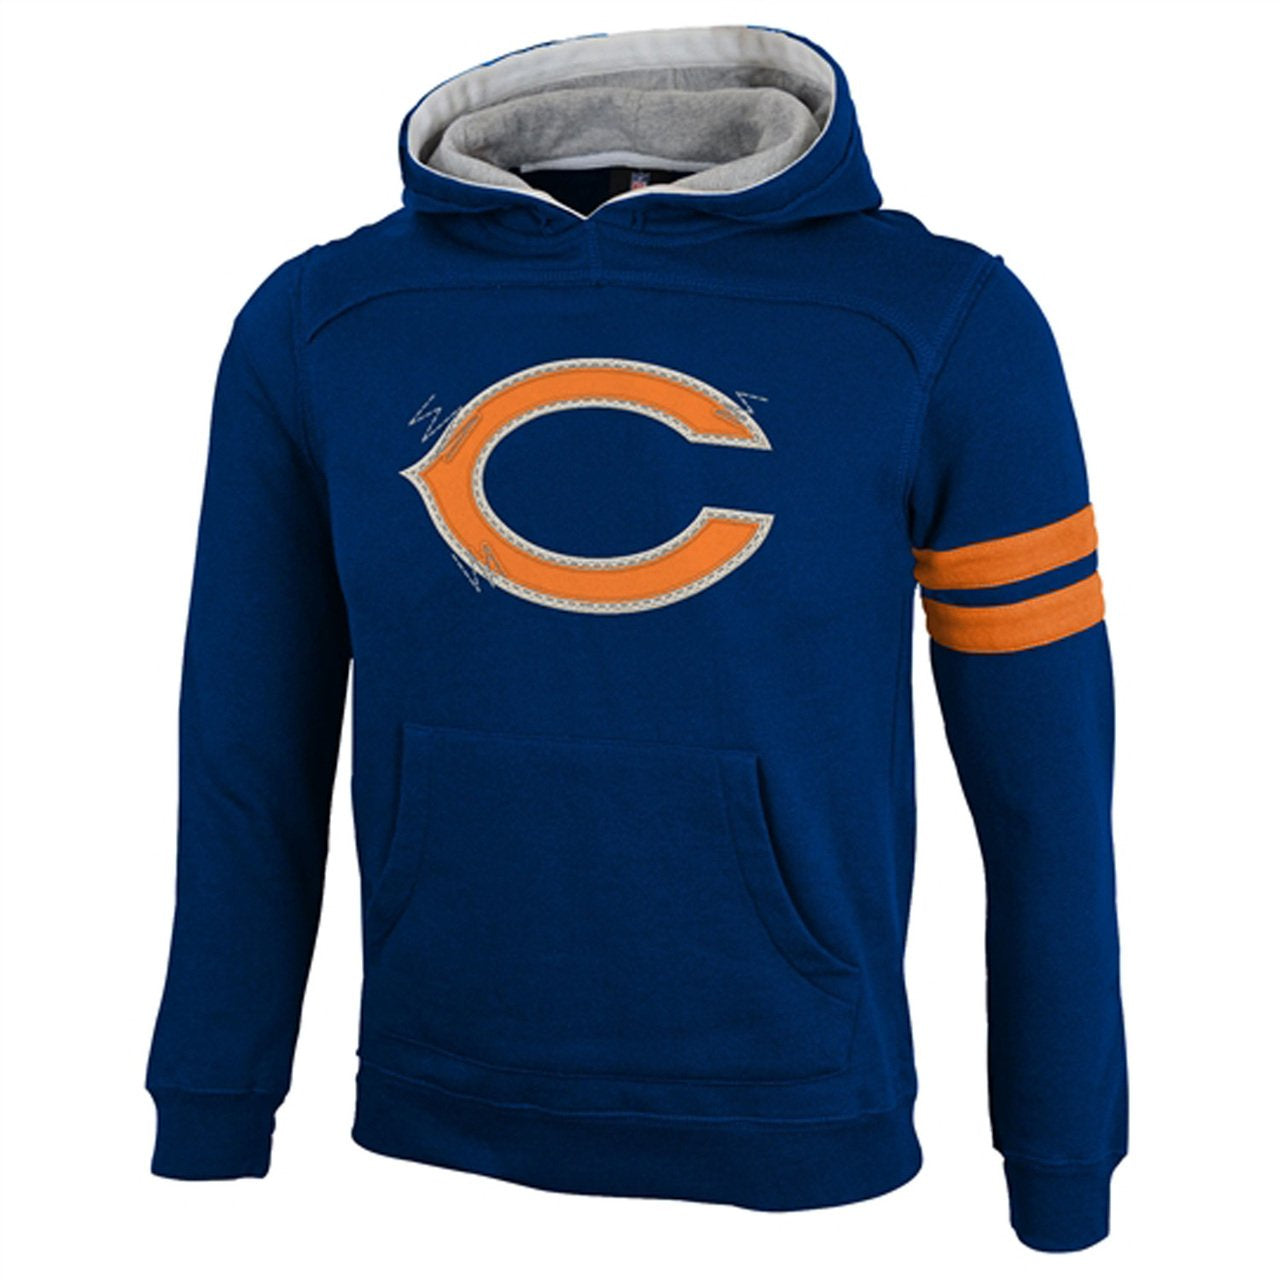 Chicago Bears Youth NFL Vintage Super Soft Hooded Sweatshirt